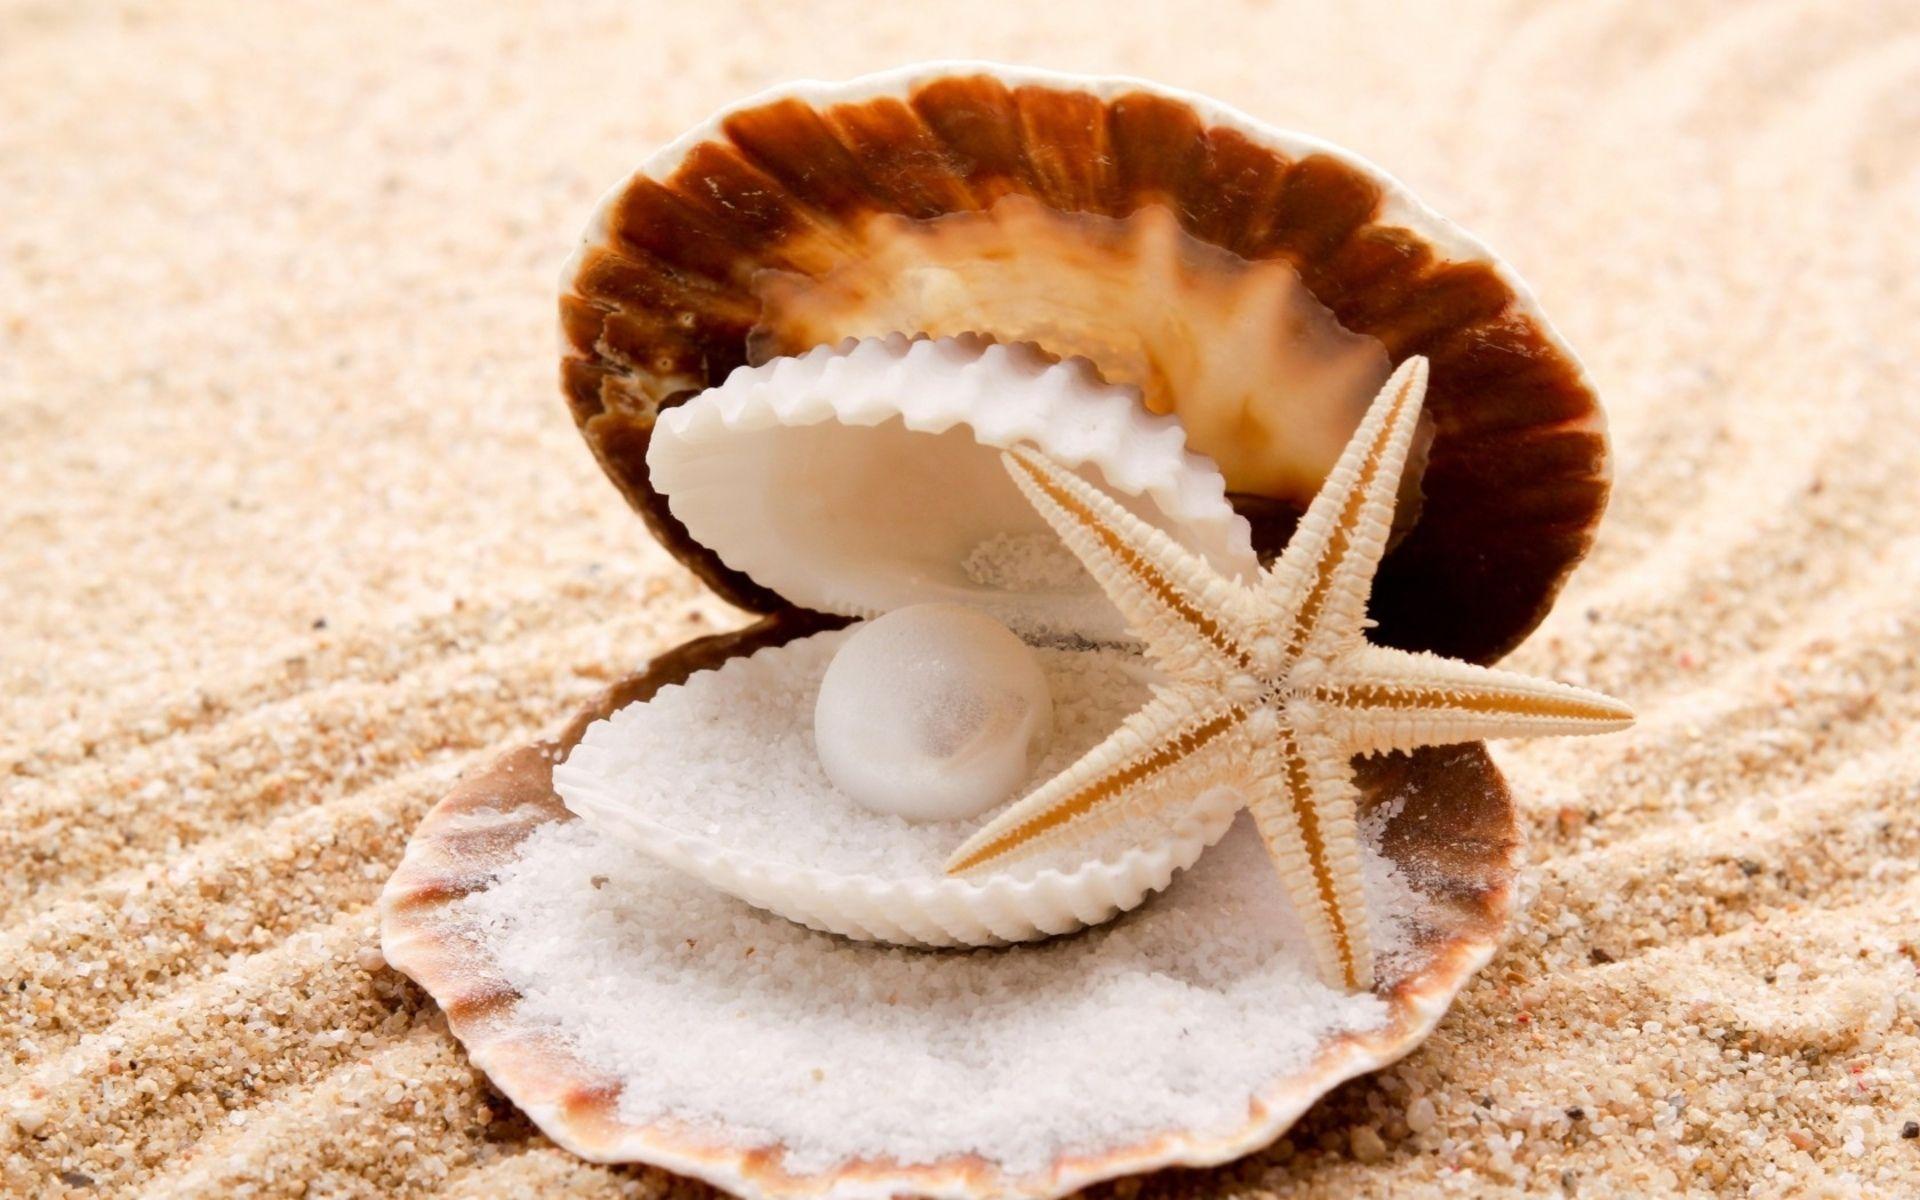 Starfish And Seashells On The Beach HD Wallpaper, Background Image